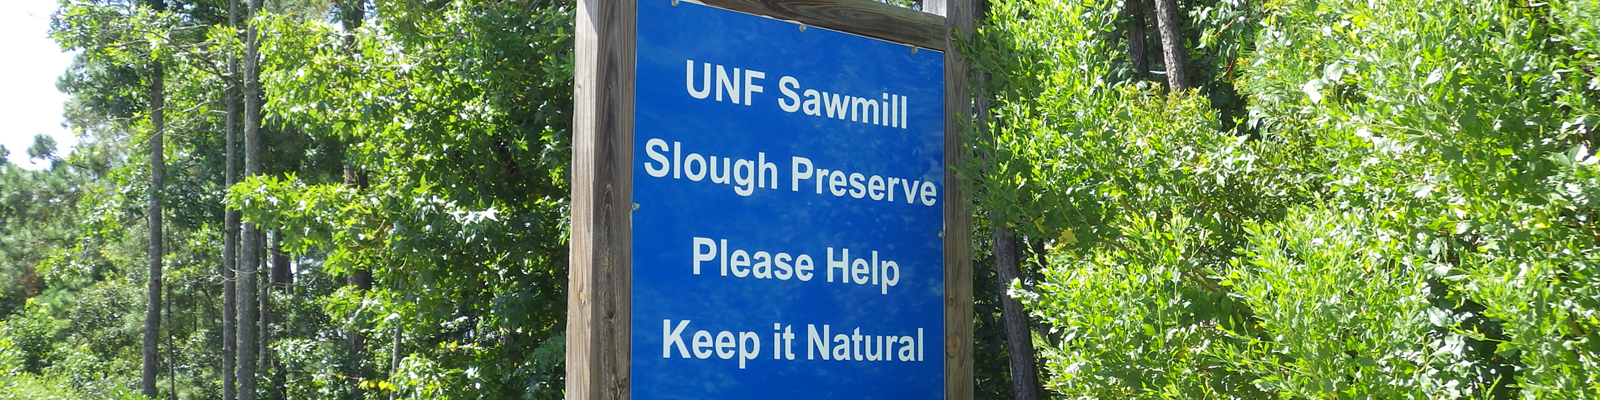 UNF Sawmill Slough Preserve sign